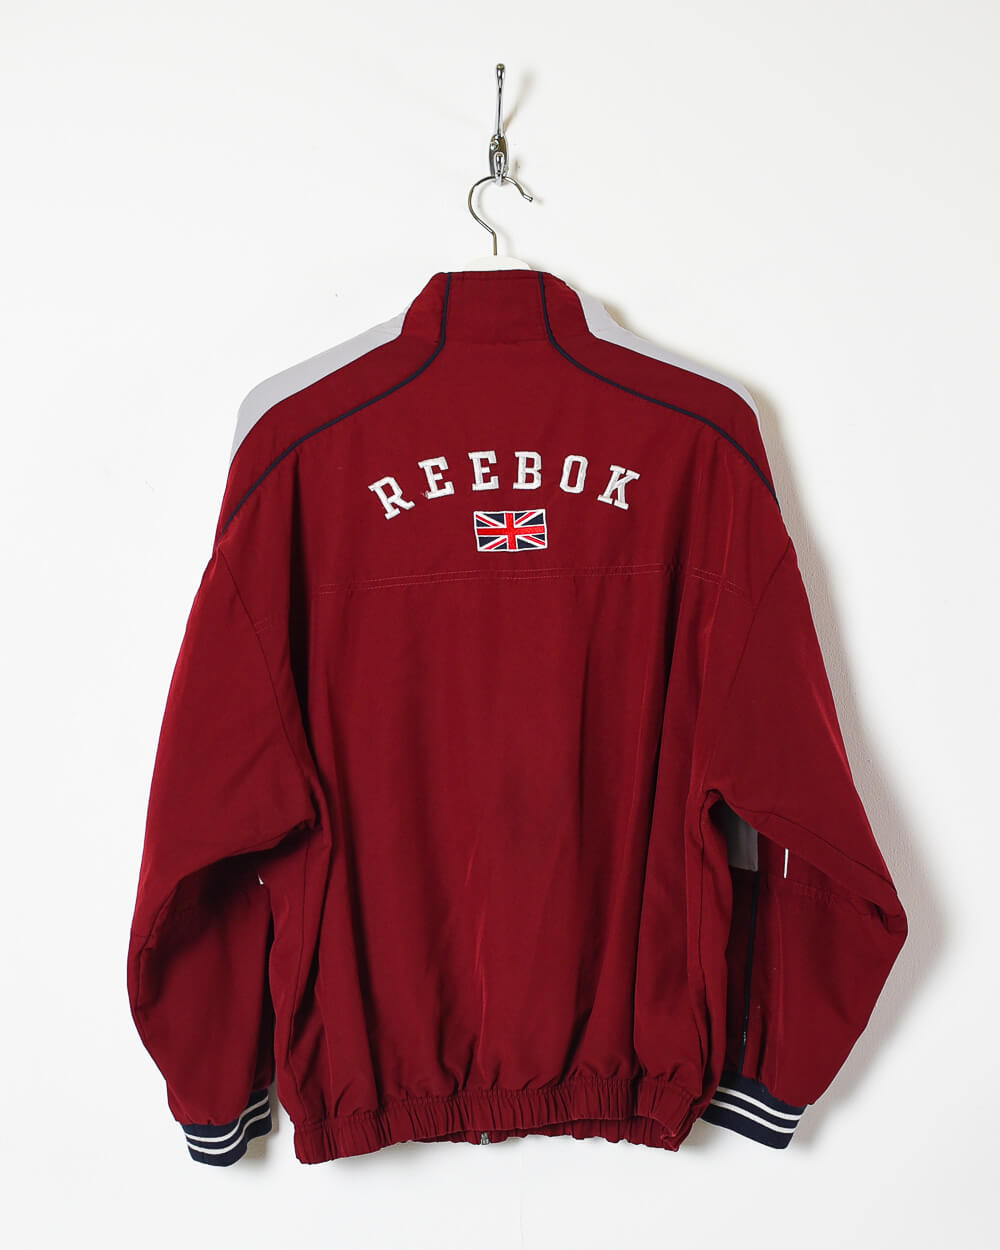 Red Reebok Classic Windbreaker Jacket - Medium